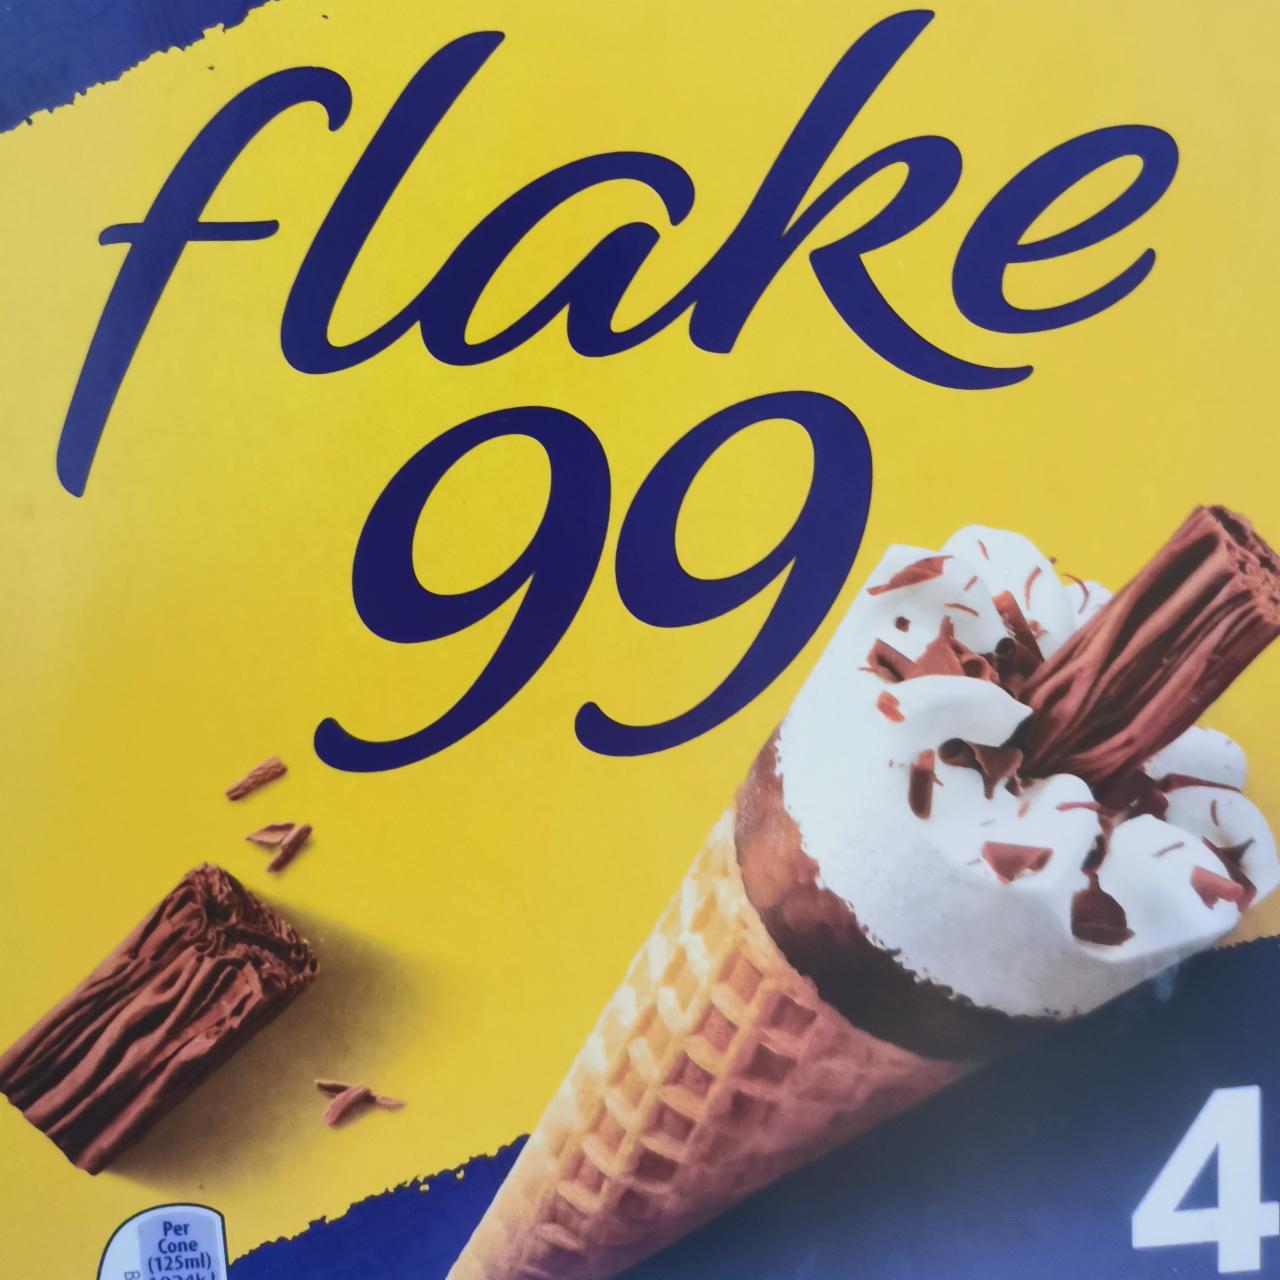 Fotografie - Flake 99 Cones Cadbury